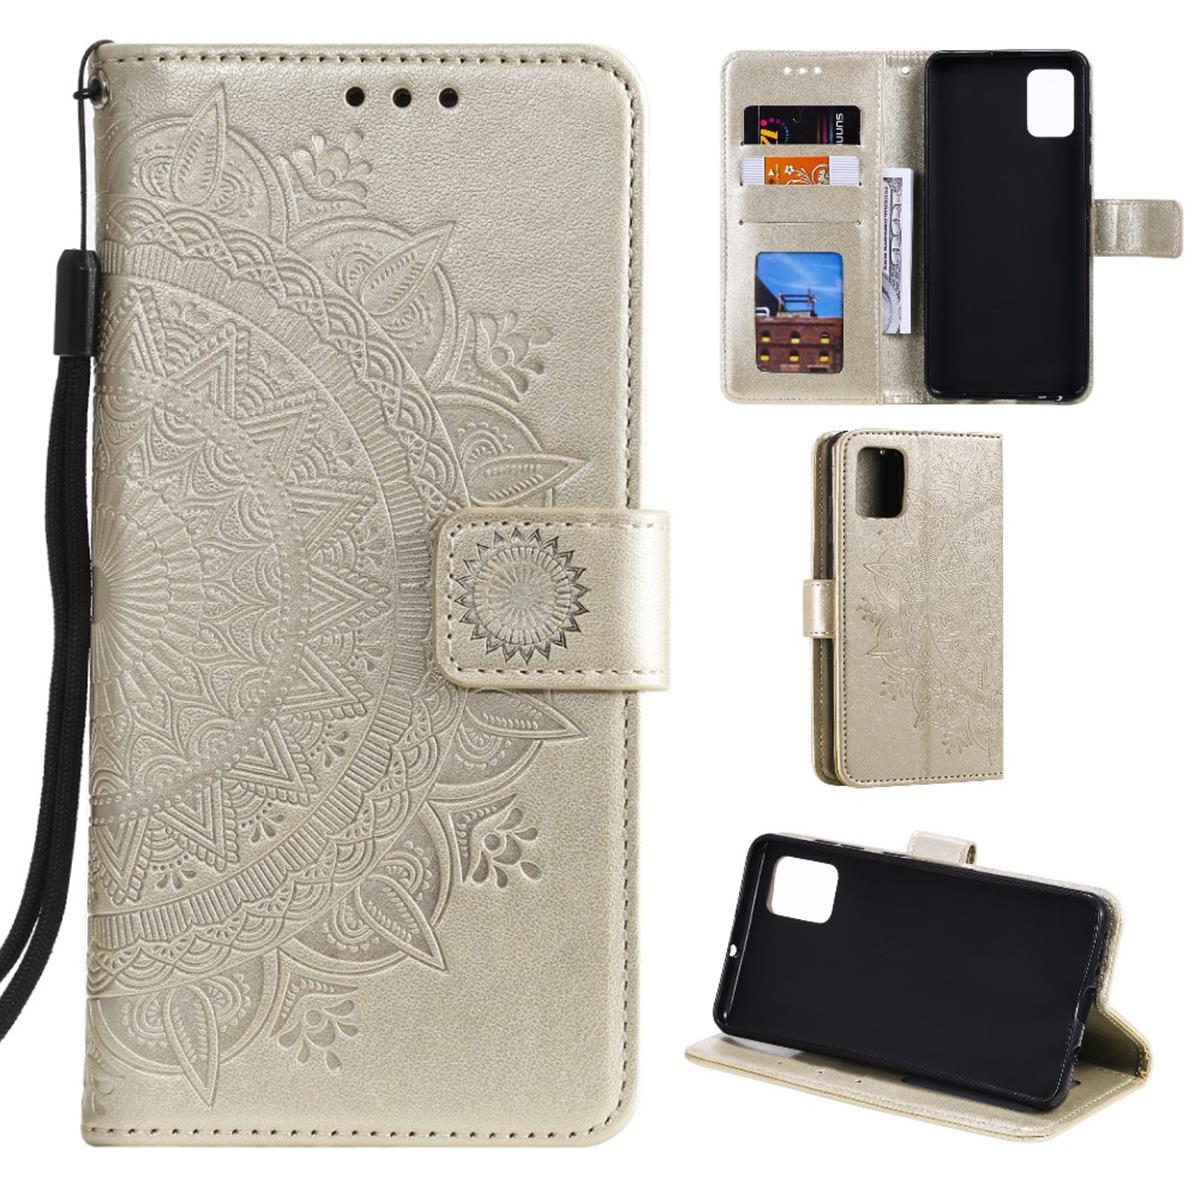 Hülle für Samsung Galaxy A31 Handyhülle Flip Case Cover Tasche Mandala Gold